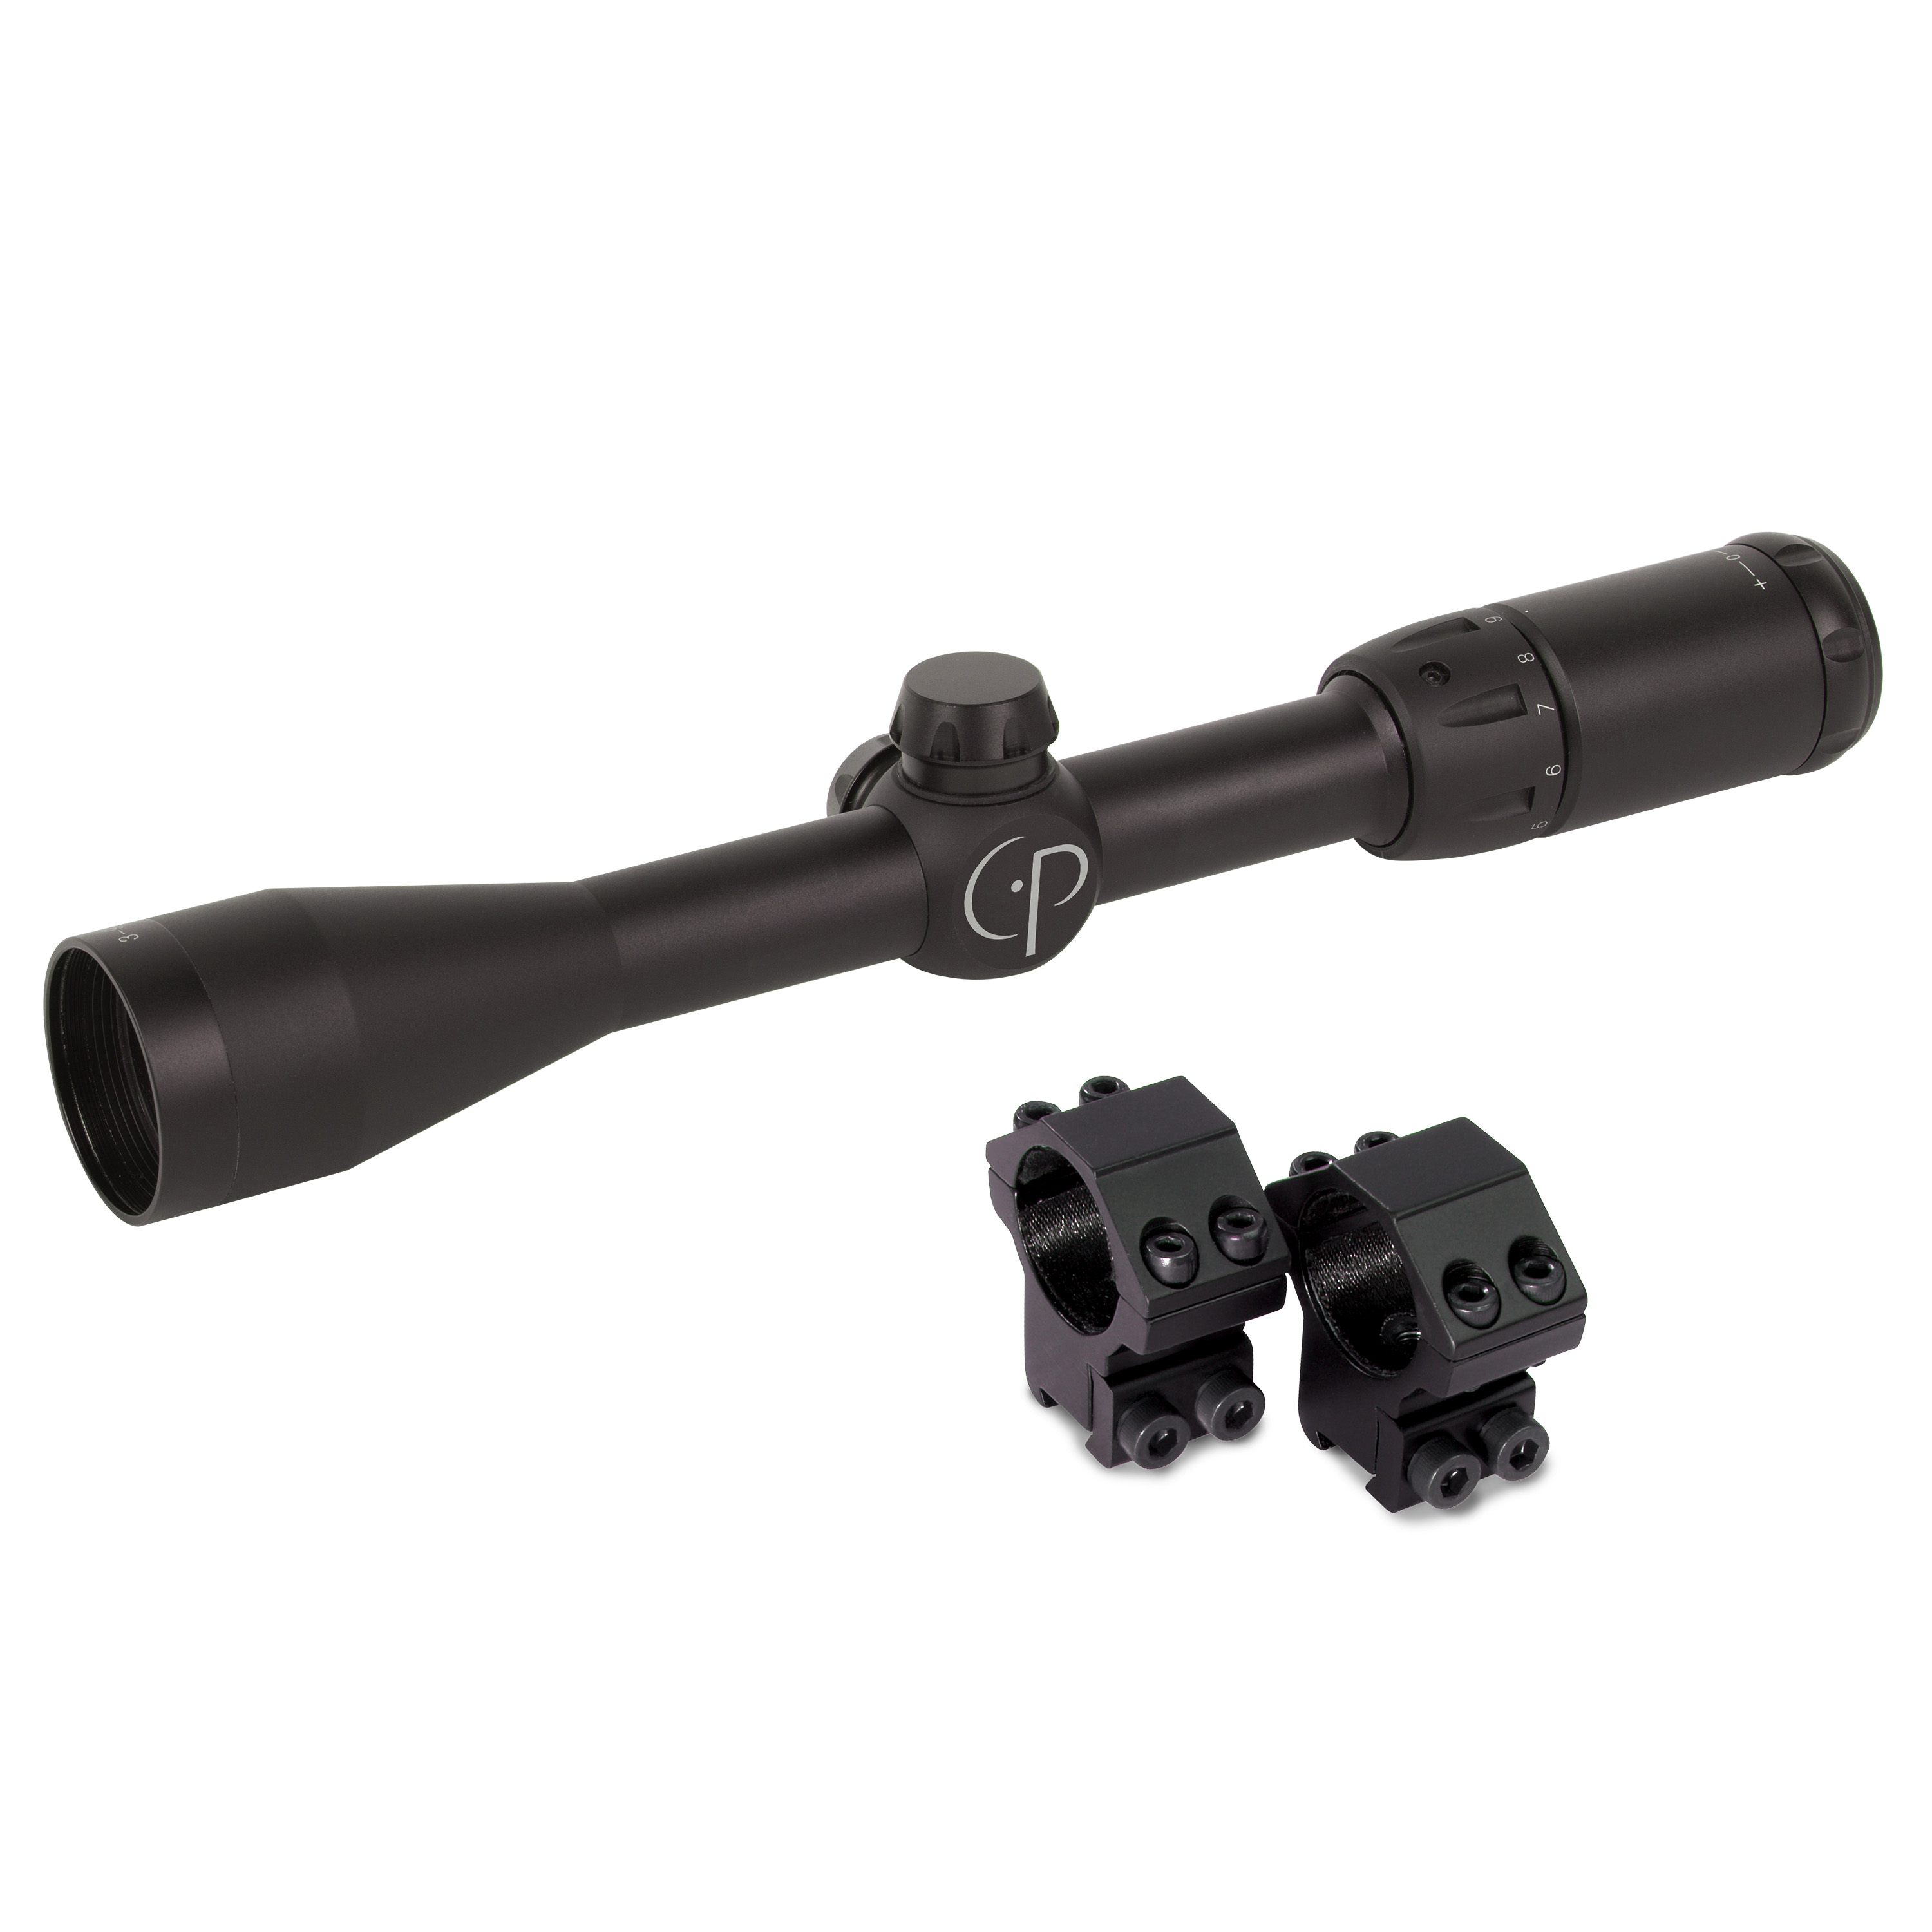 Centerpoint 3-9x32mm Rifle Scope, Illumination Mil-dot Reticle, LR392RG2 - image 1 of 5